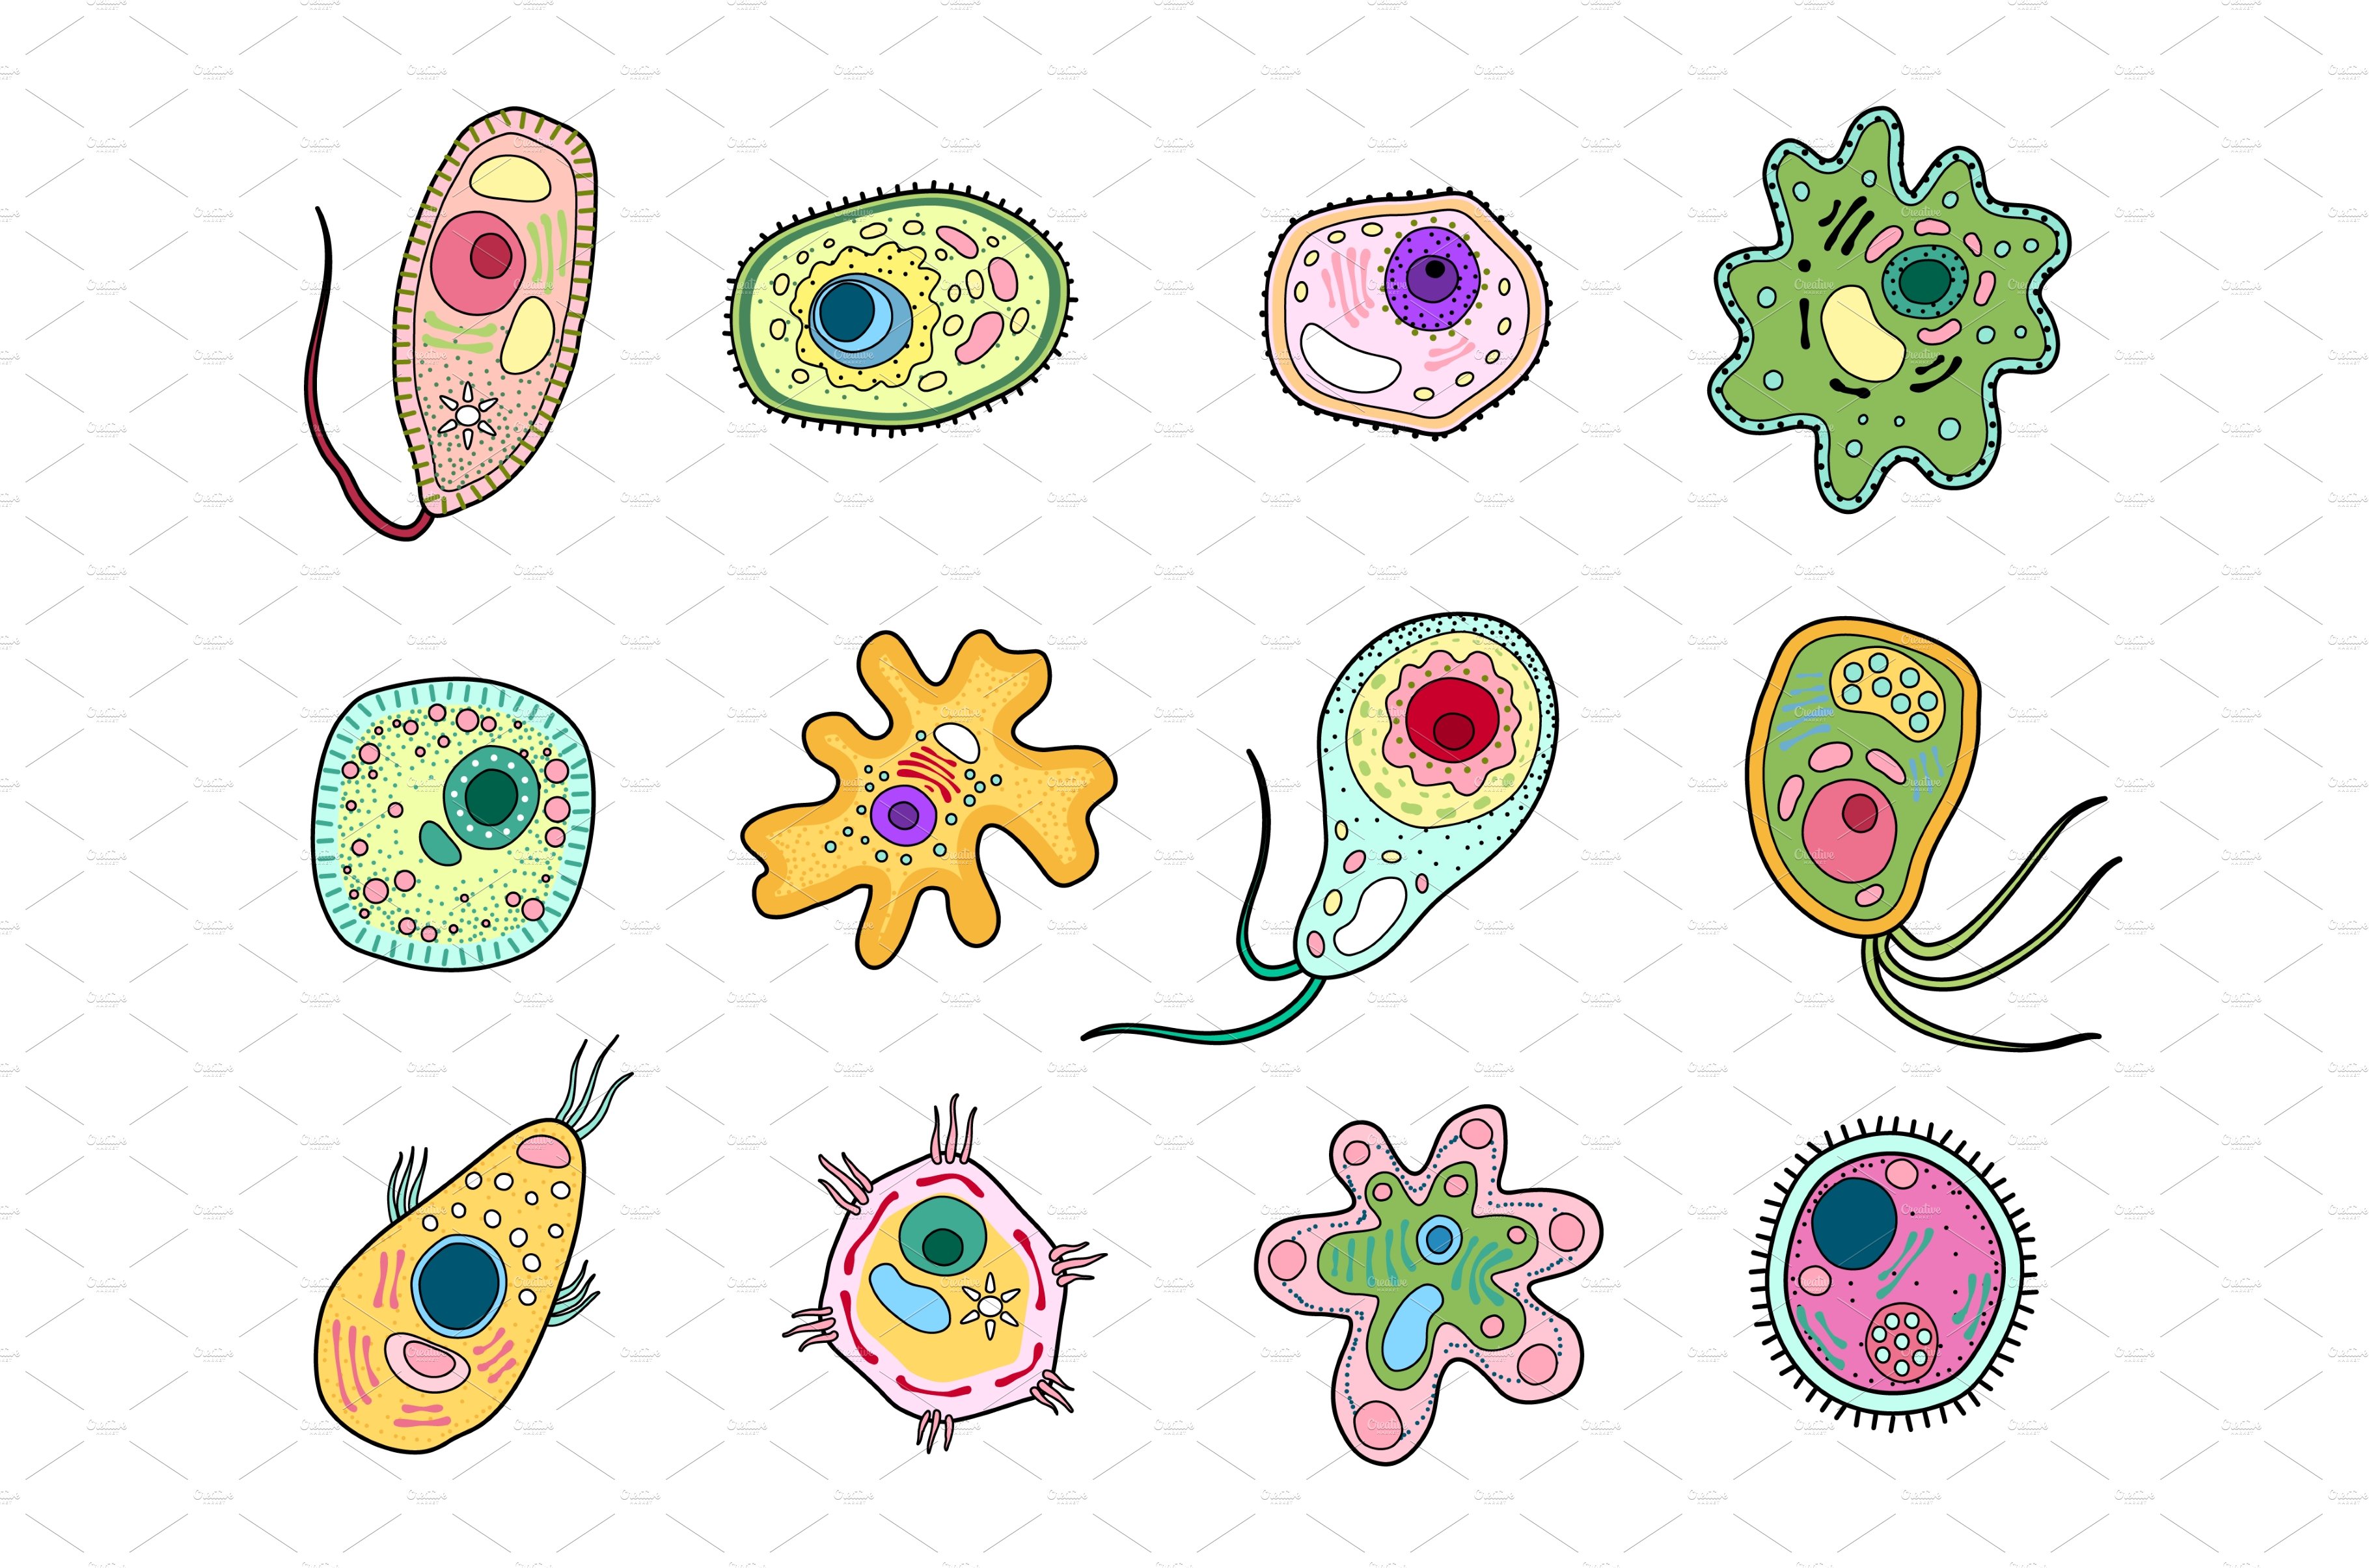 protozoa types